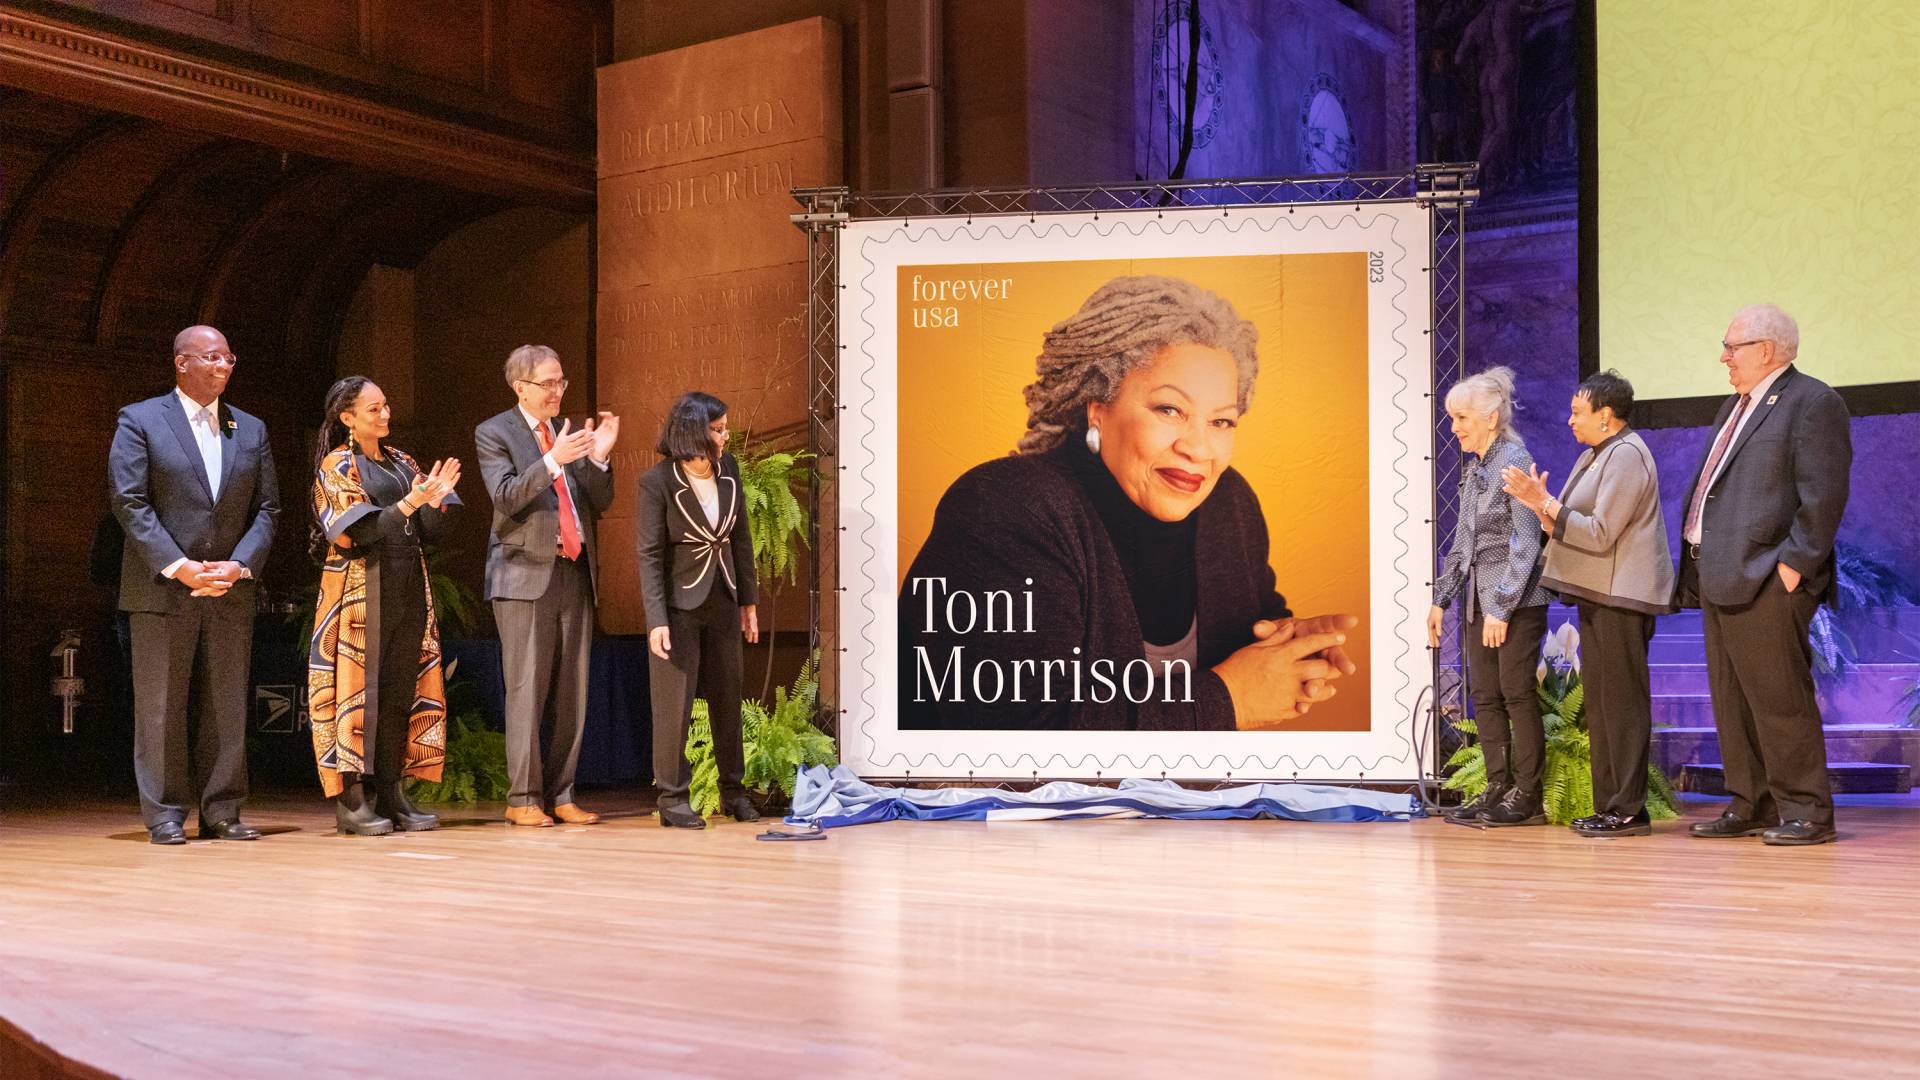 Toni Morrison USPS stamp unveiling